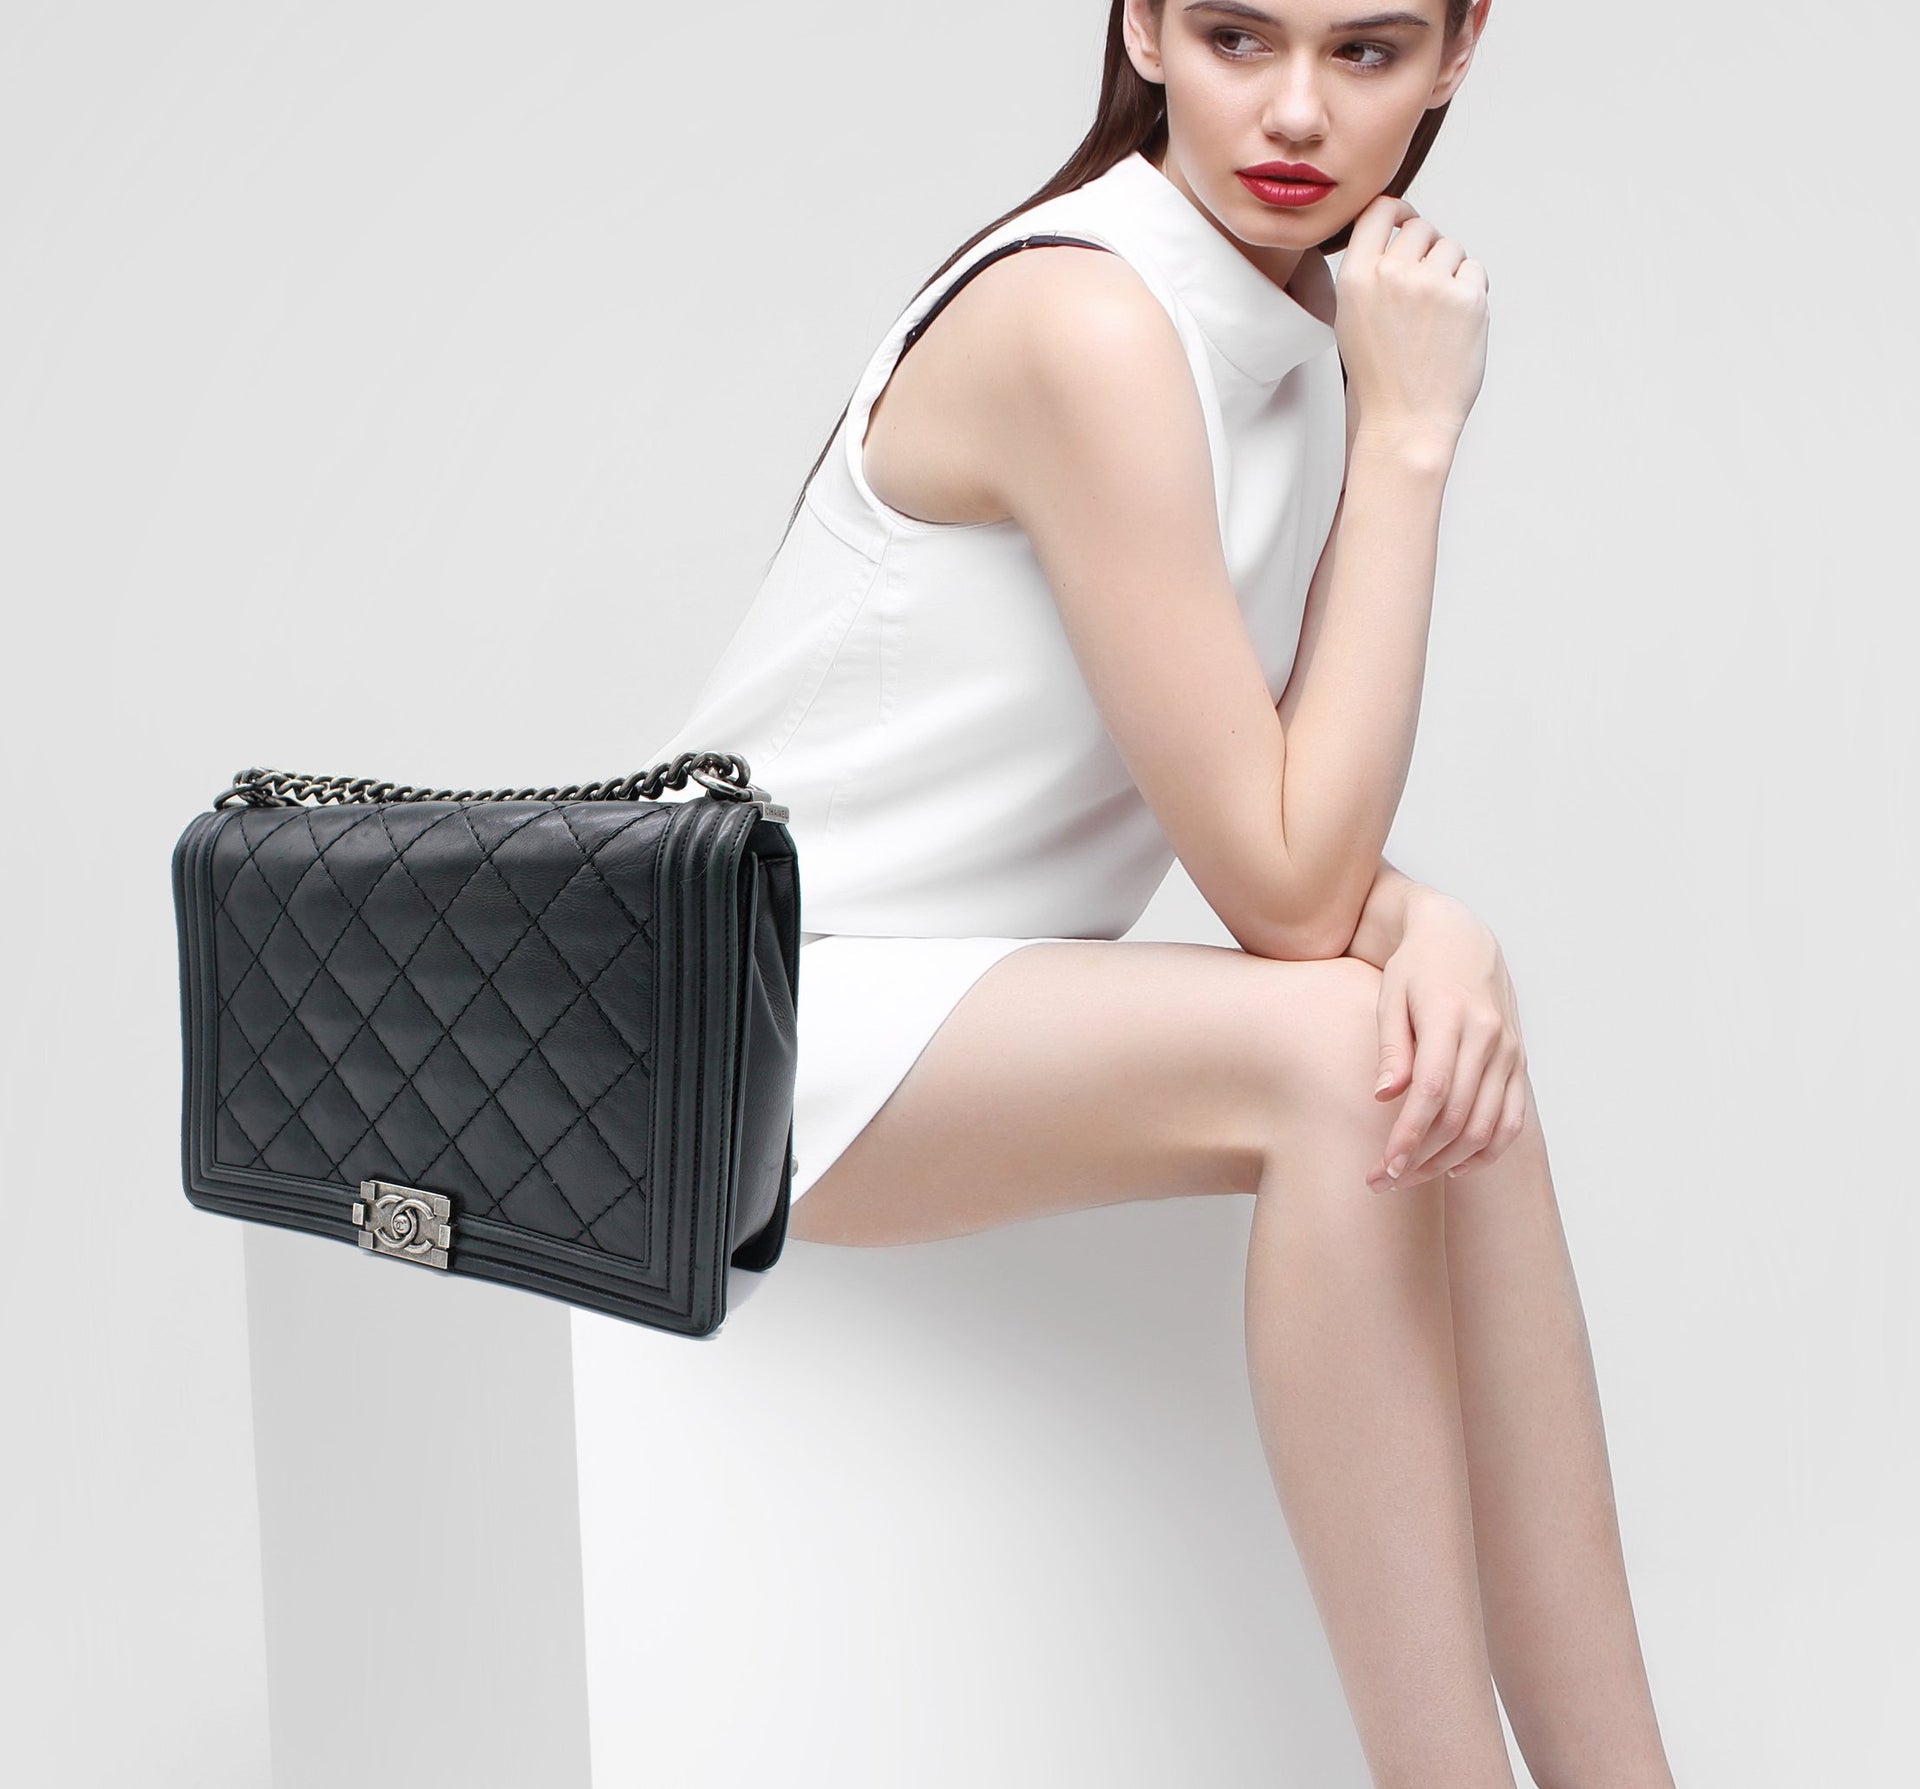 Chanel Black Quilted Calfskin Top Handle Boy Bag Medium